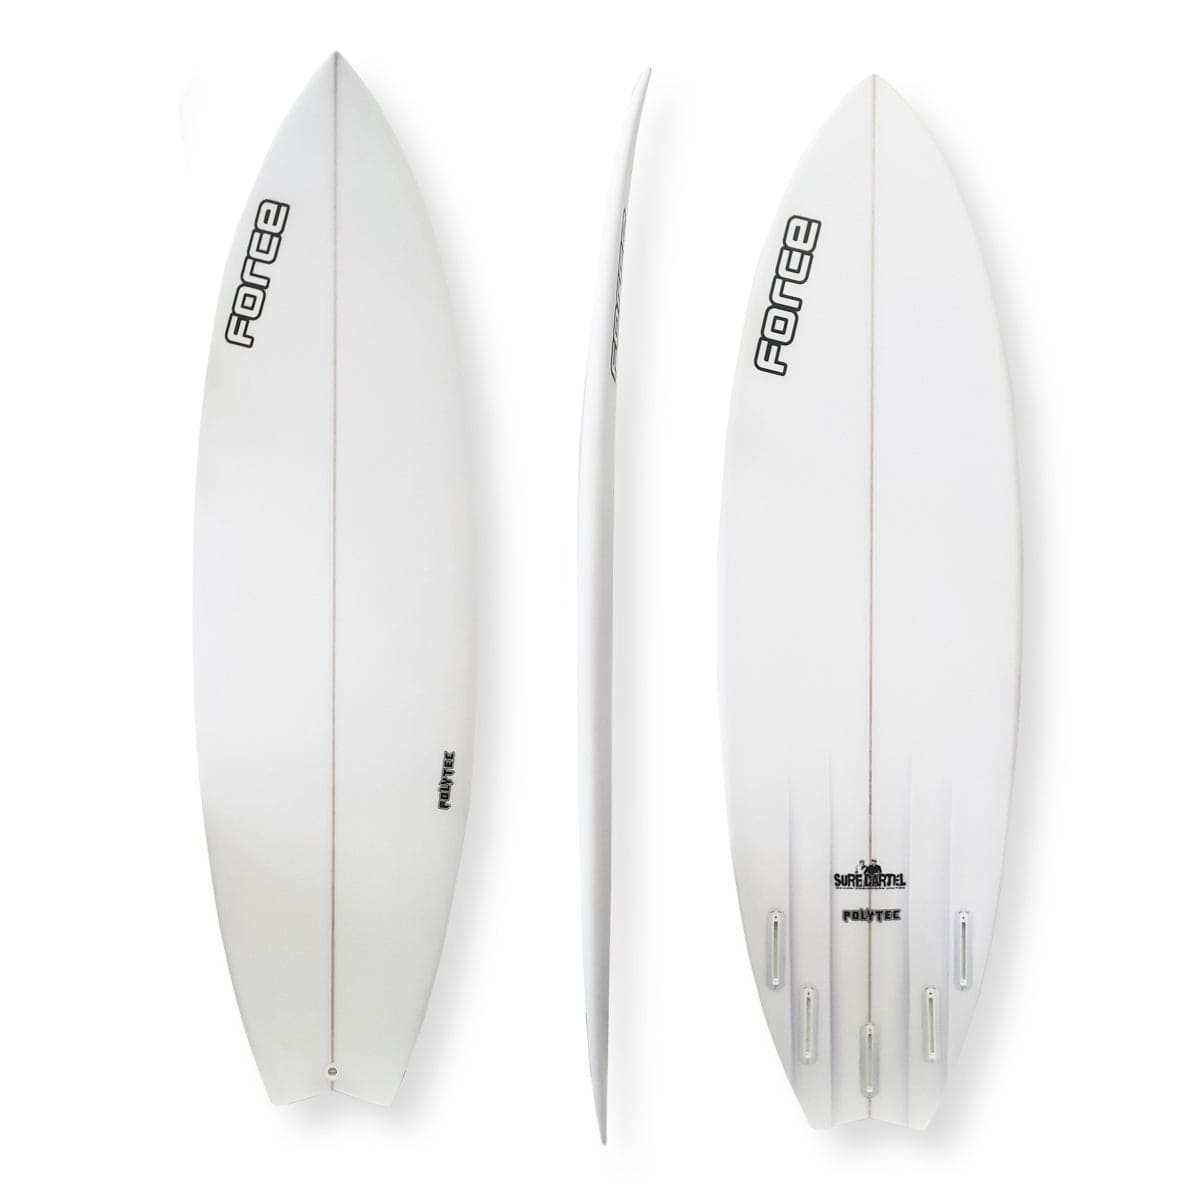 Force Speedsta Polytec 6'0" Surfboard